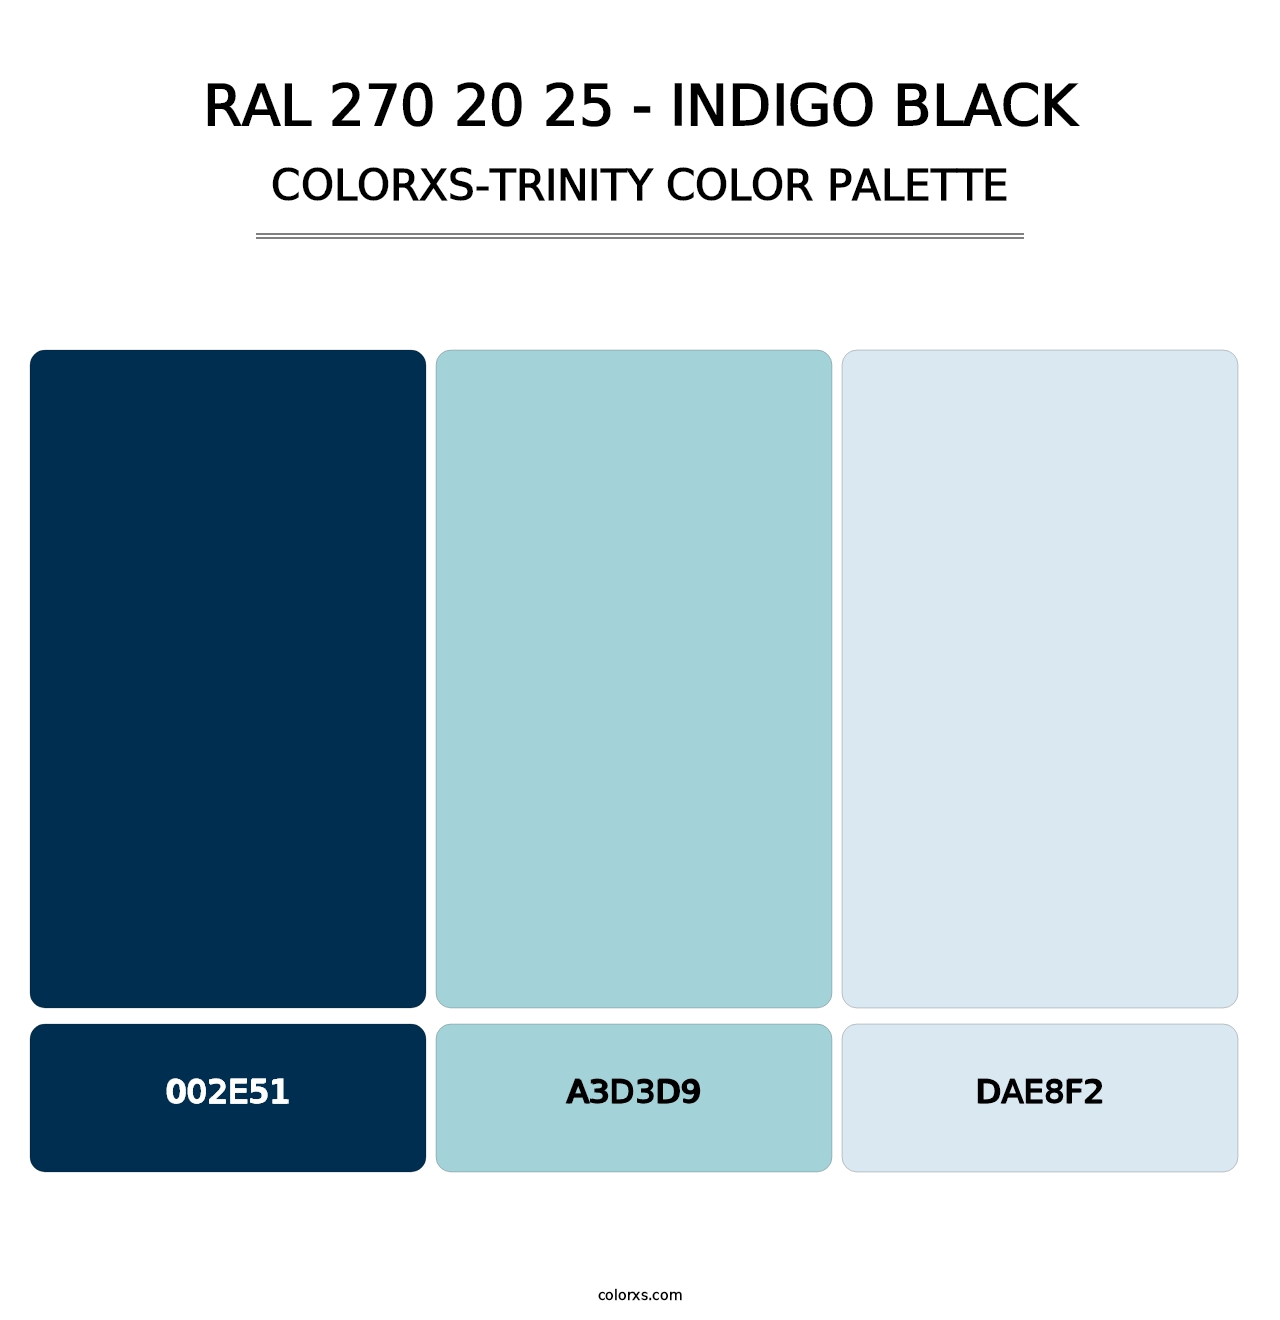 RAL 270 20 25 - Indigo Black - Colorxs Trinity Palette